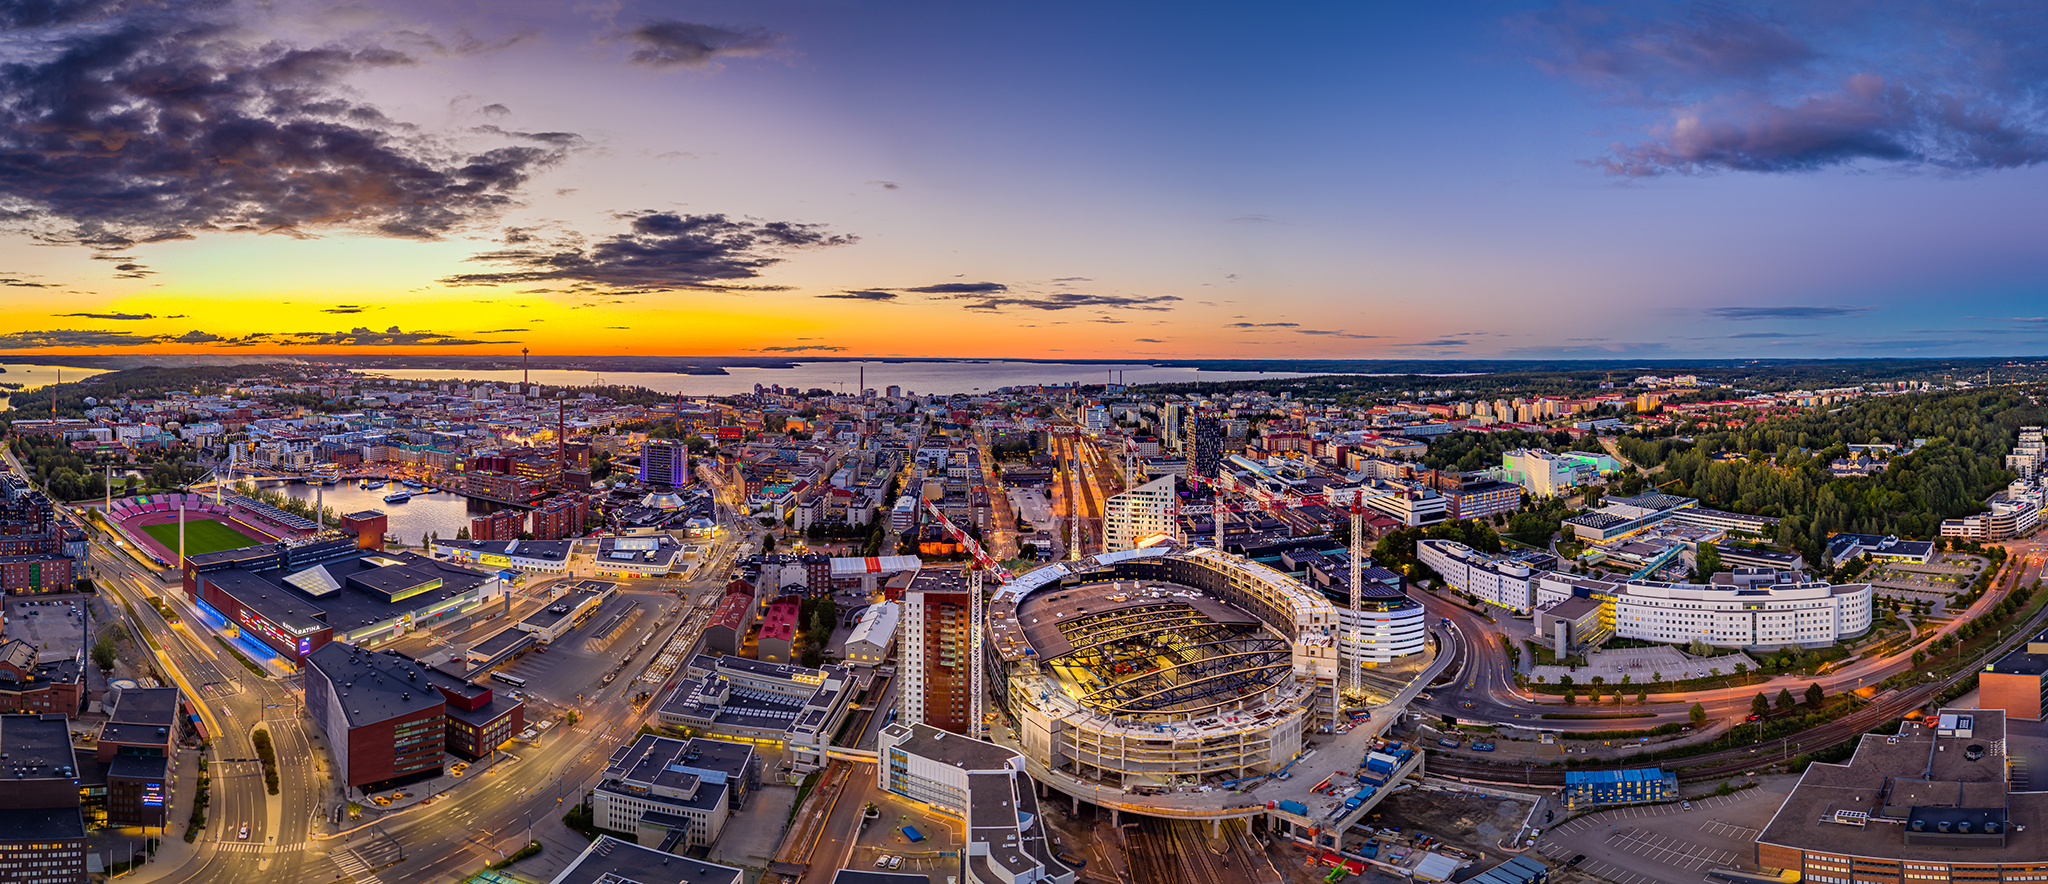 Tampere city skyview with arena. Photo: Marko Kallio